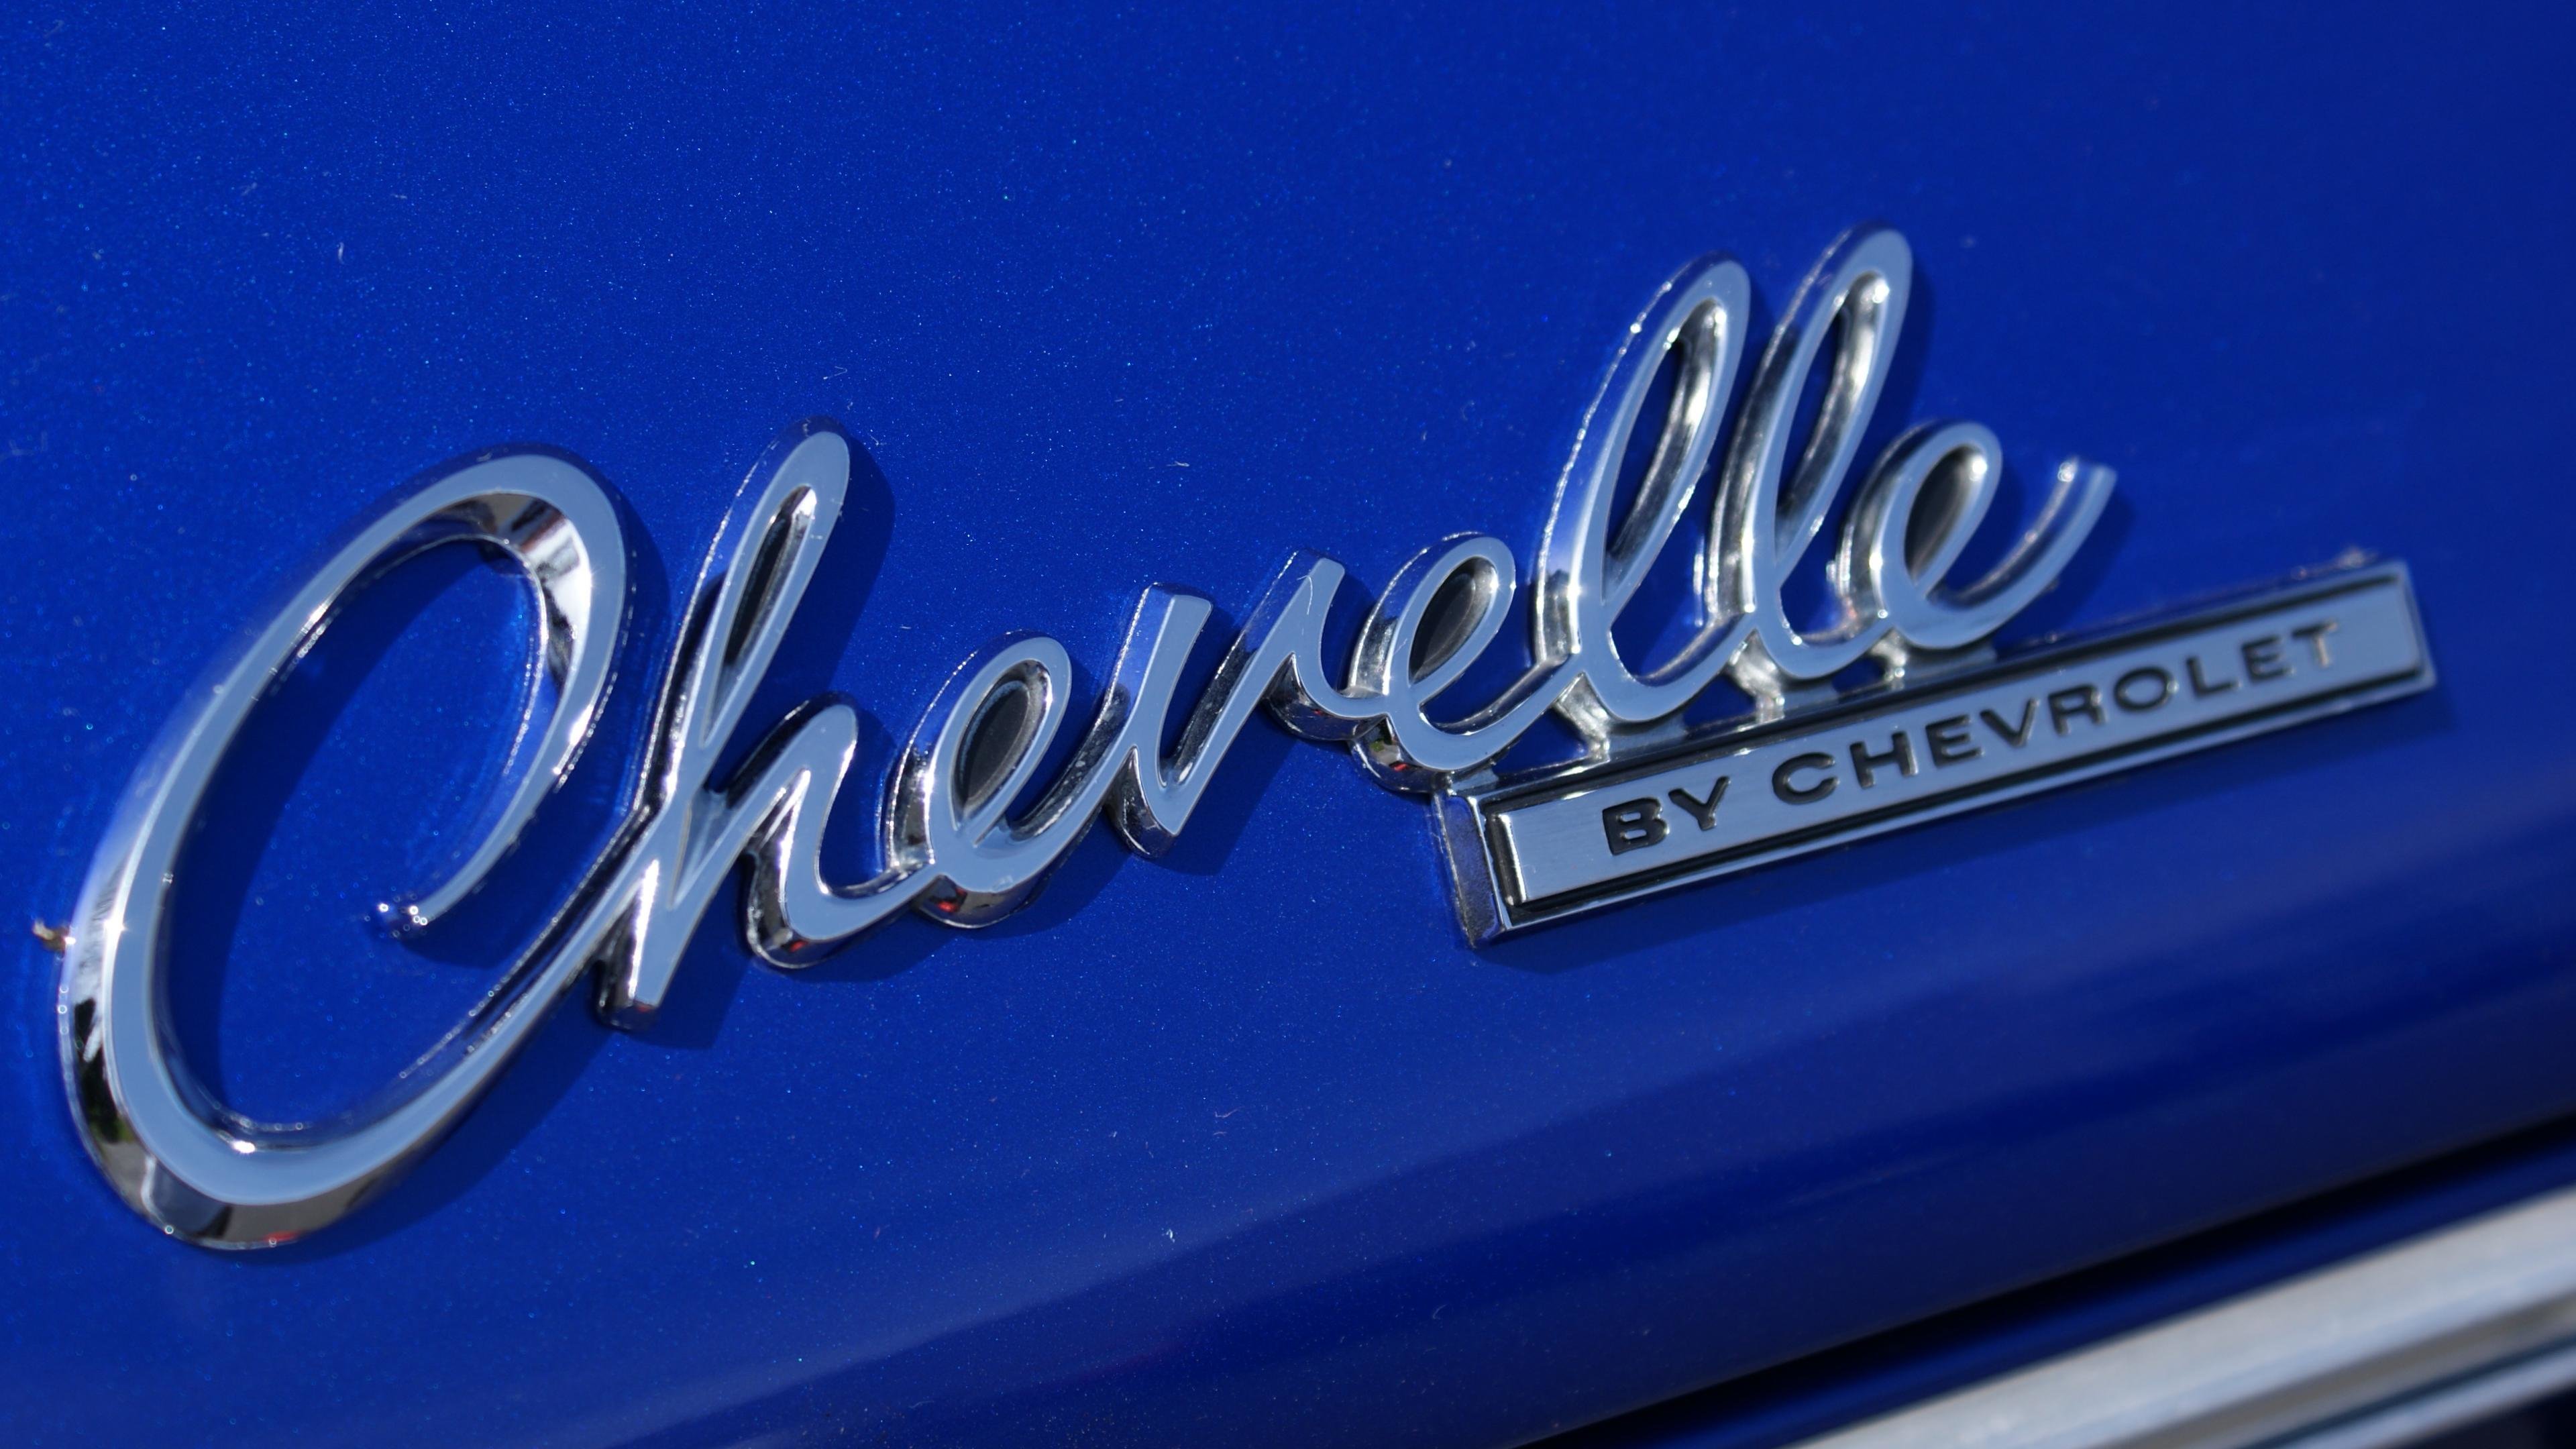 High resolution Chevrolet Chevelle ultra hd 4k wallpaper ID:347206 for desktop